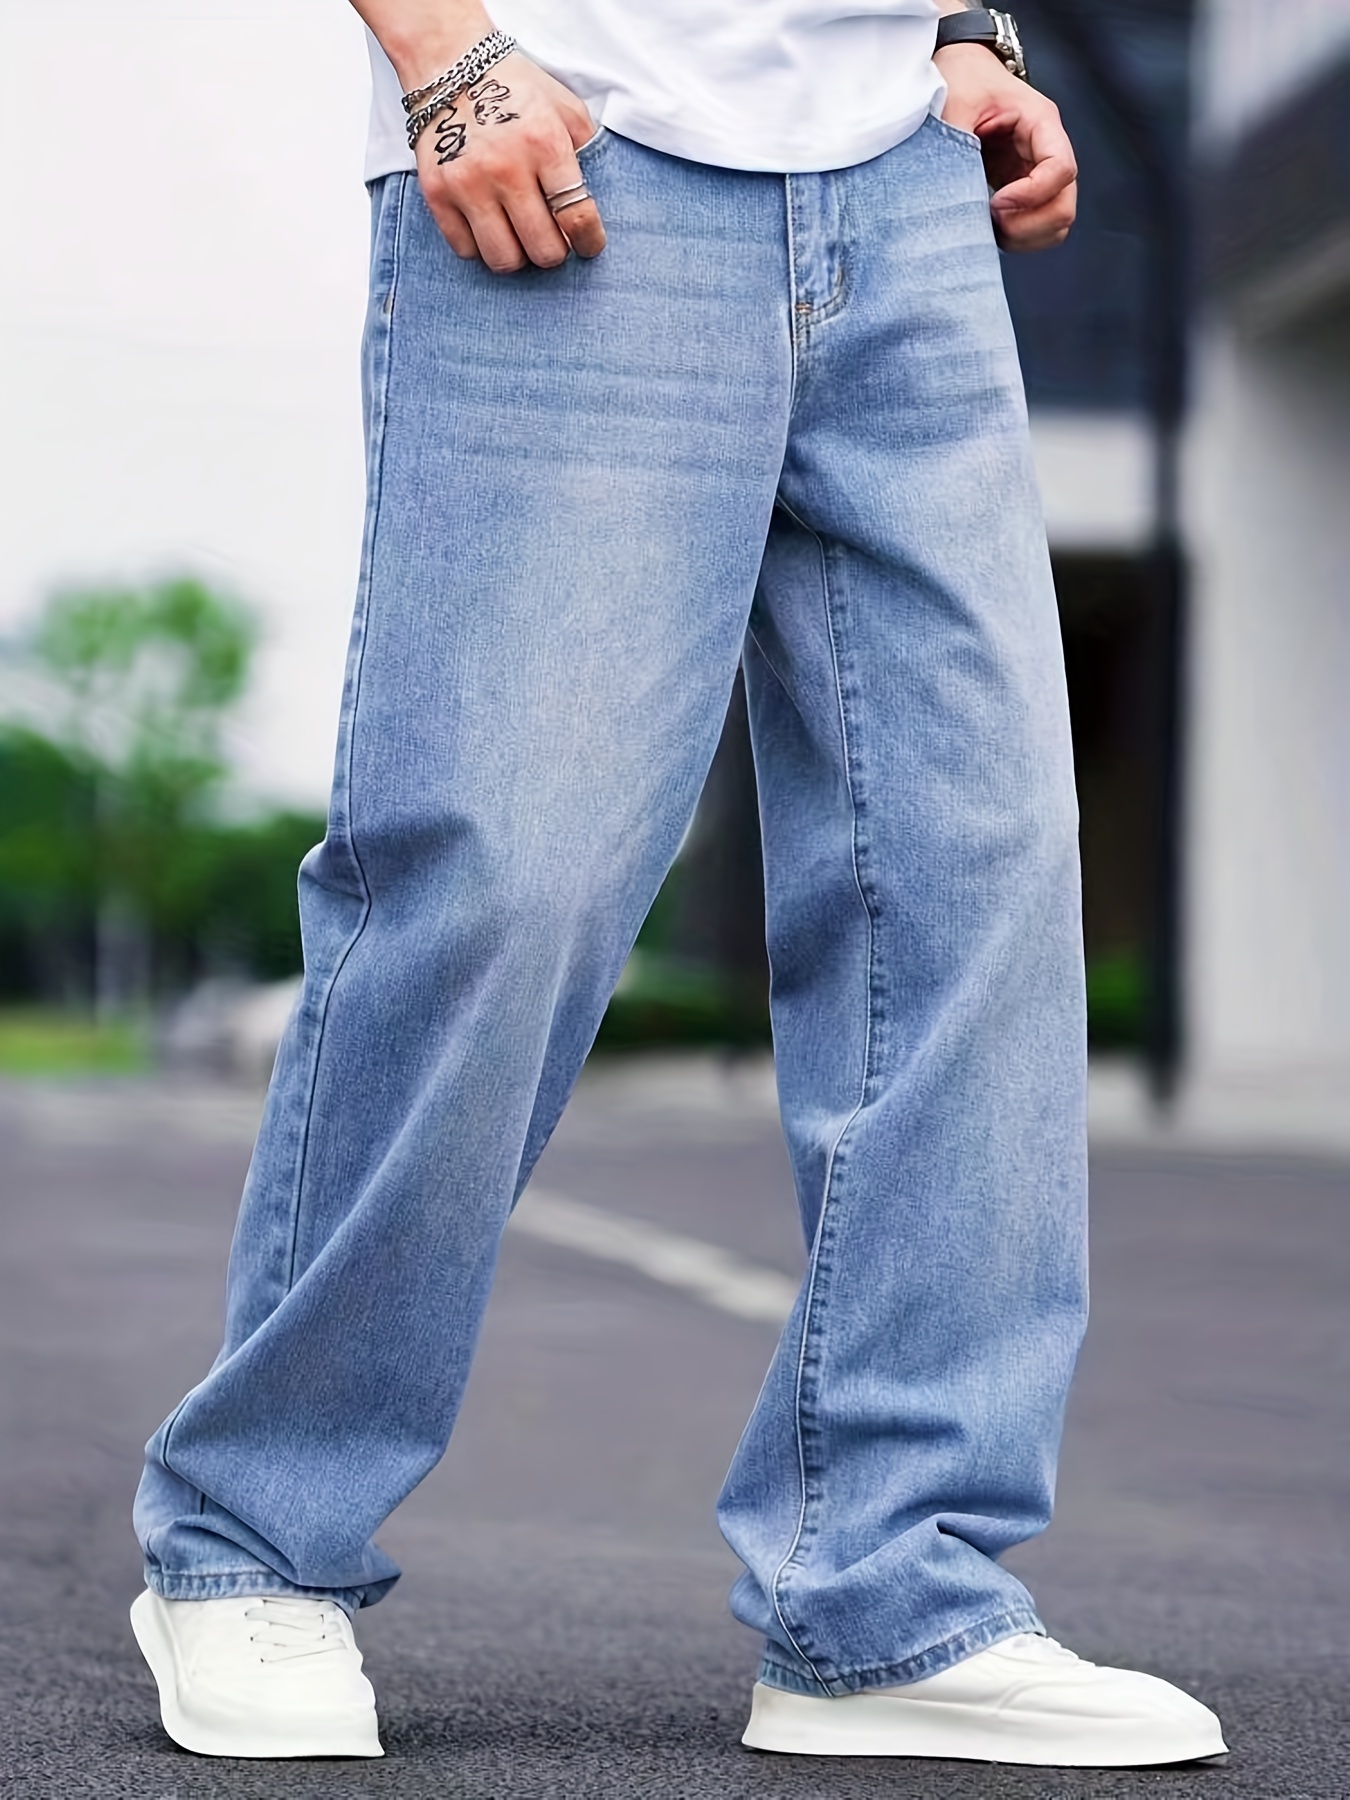 Pantalon De Mezclilla Casual Para Hombre 'El Norteño' *Azul Oscuro-126633*  - BELLEZA'S